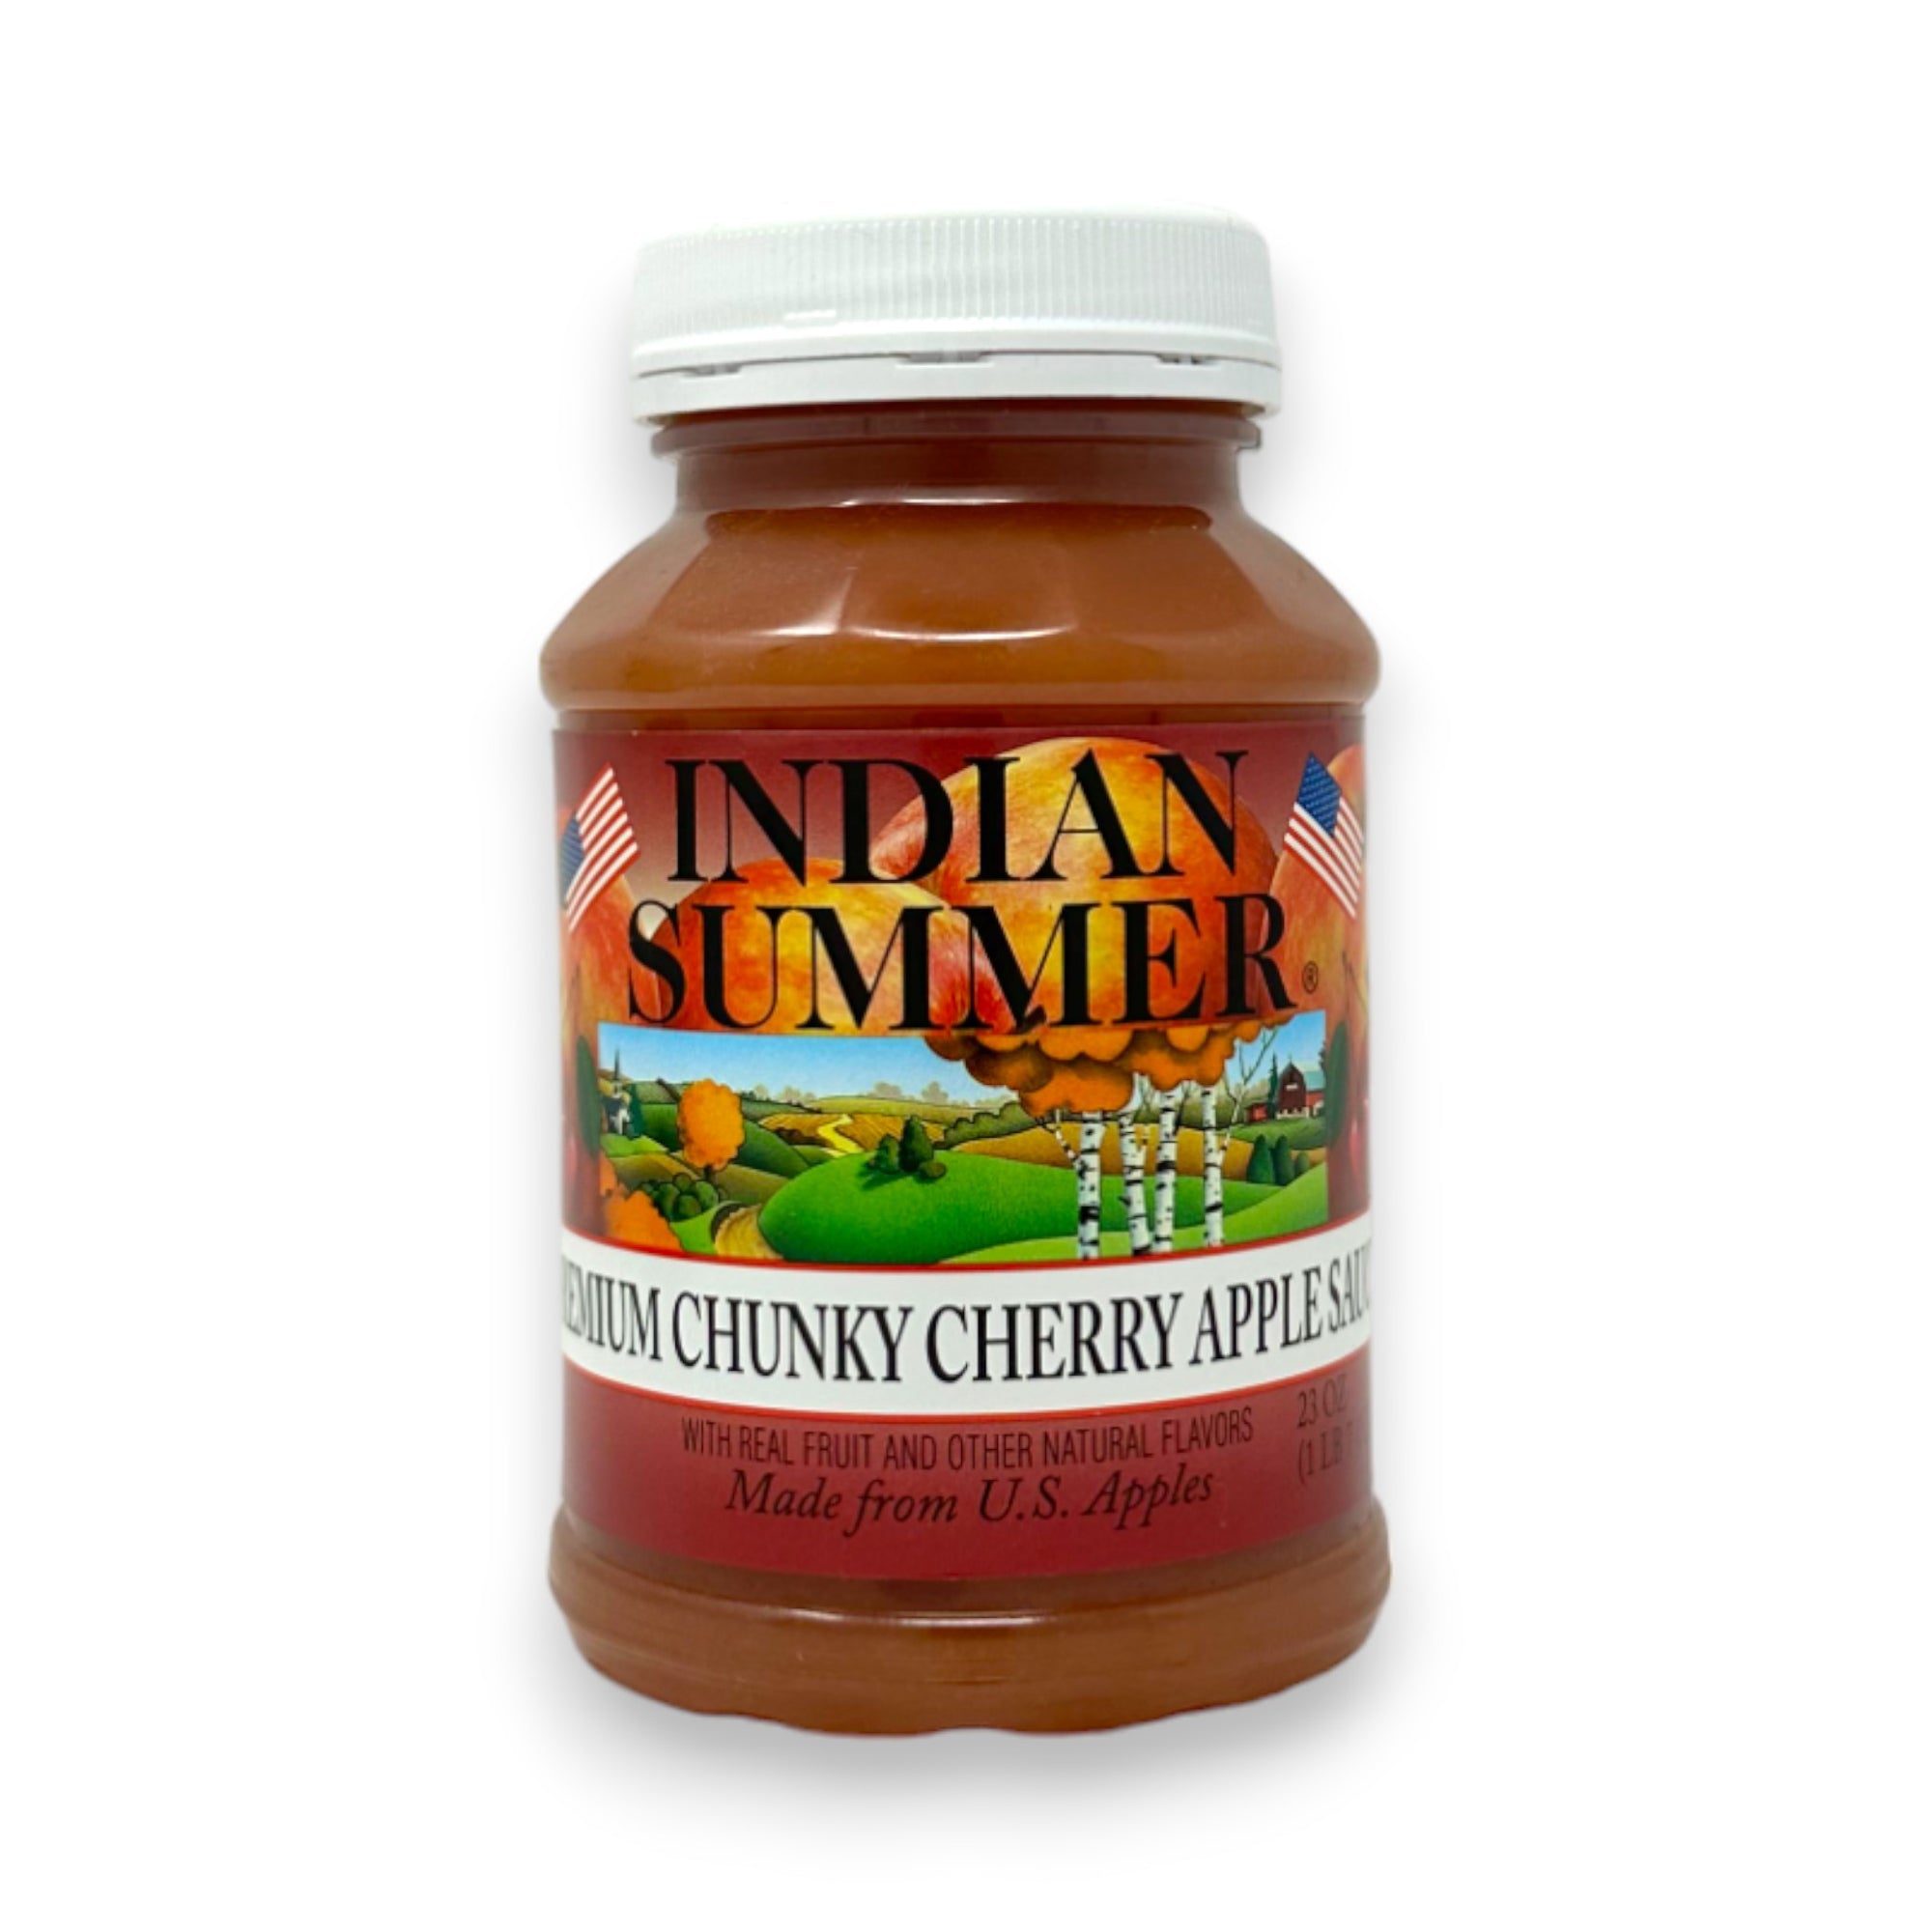 Indian Summer Premium Chunky Cherry Applesauce